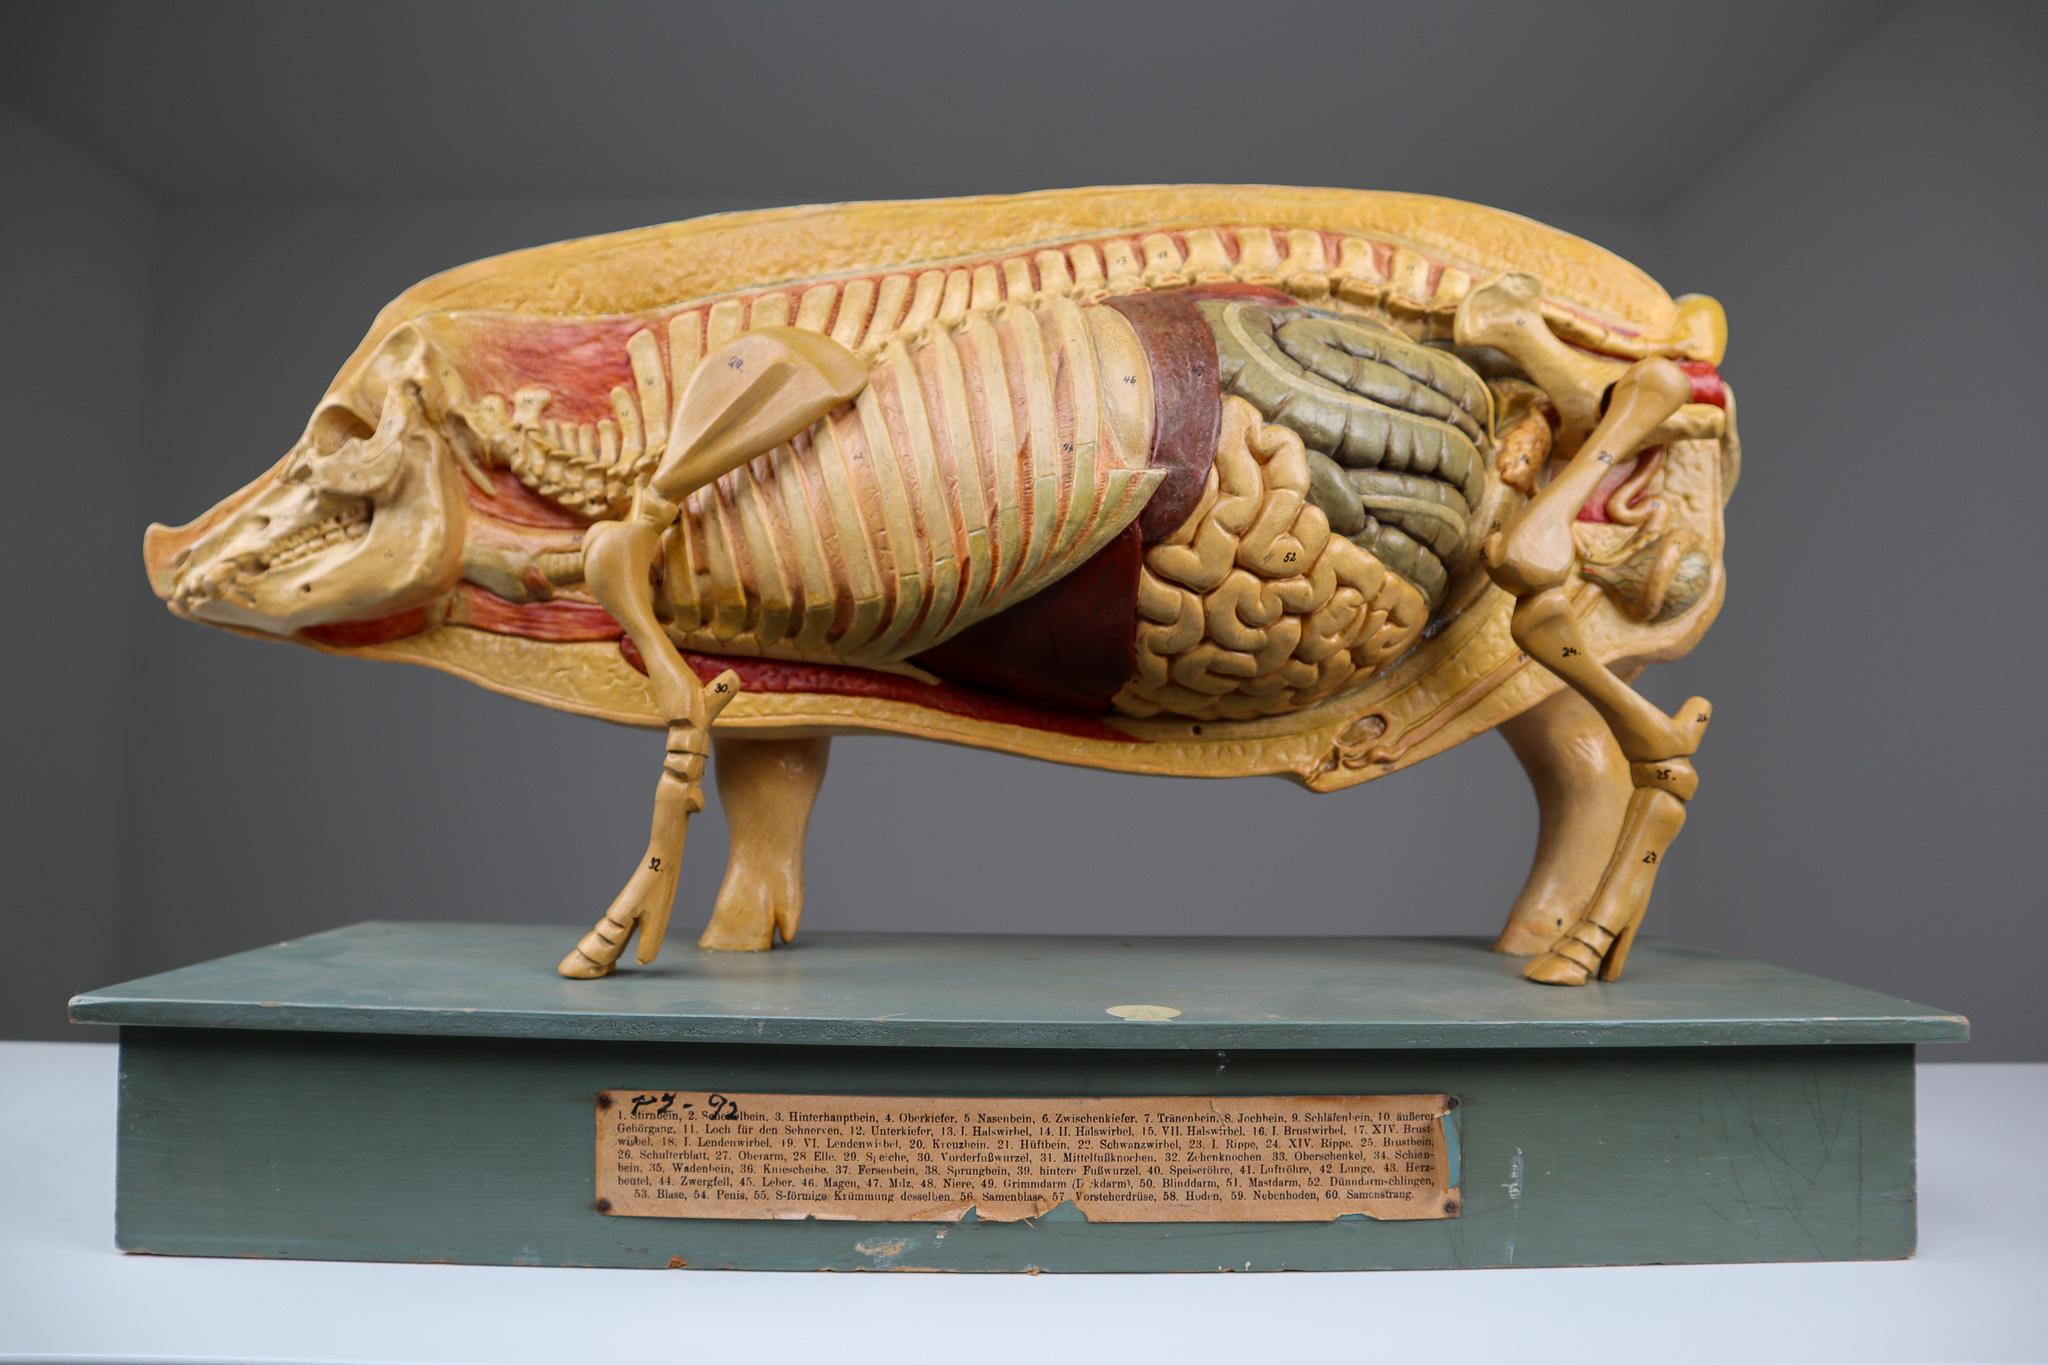 anatomy of pig